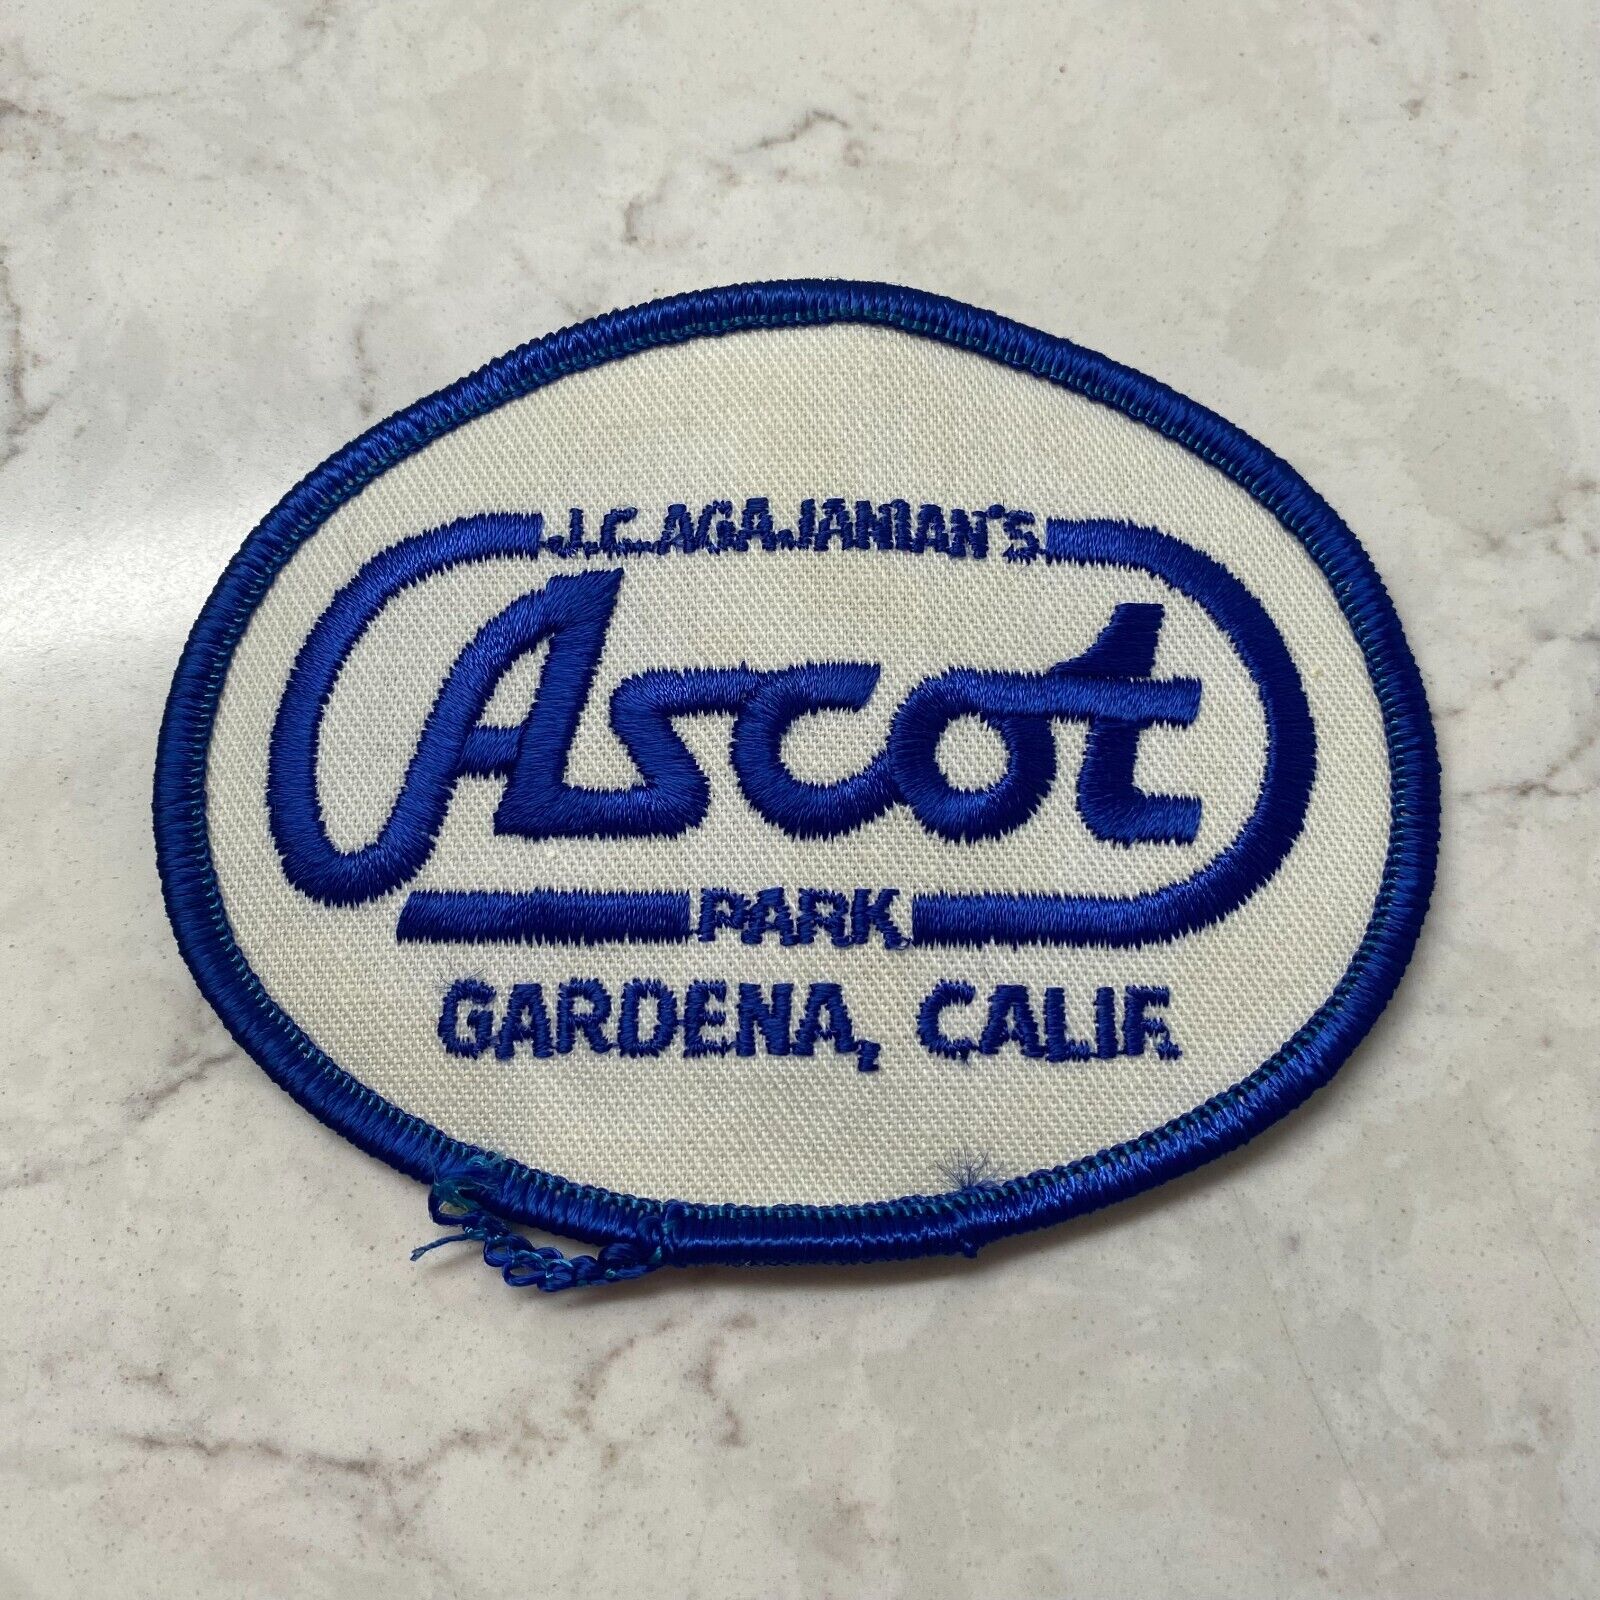 Vintage J.C. Agajanian Ascot Park Gardena Calif Embroidered Oval Rare Patch